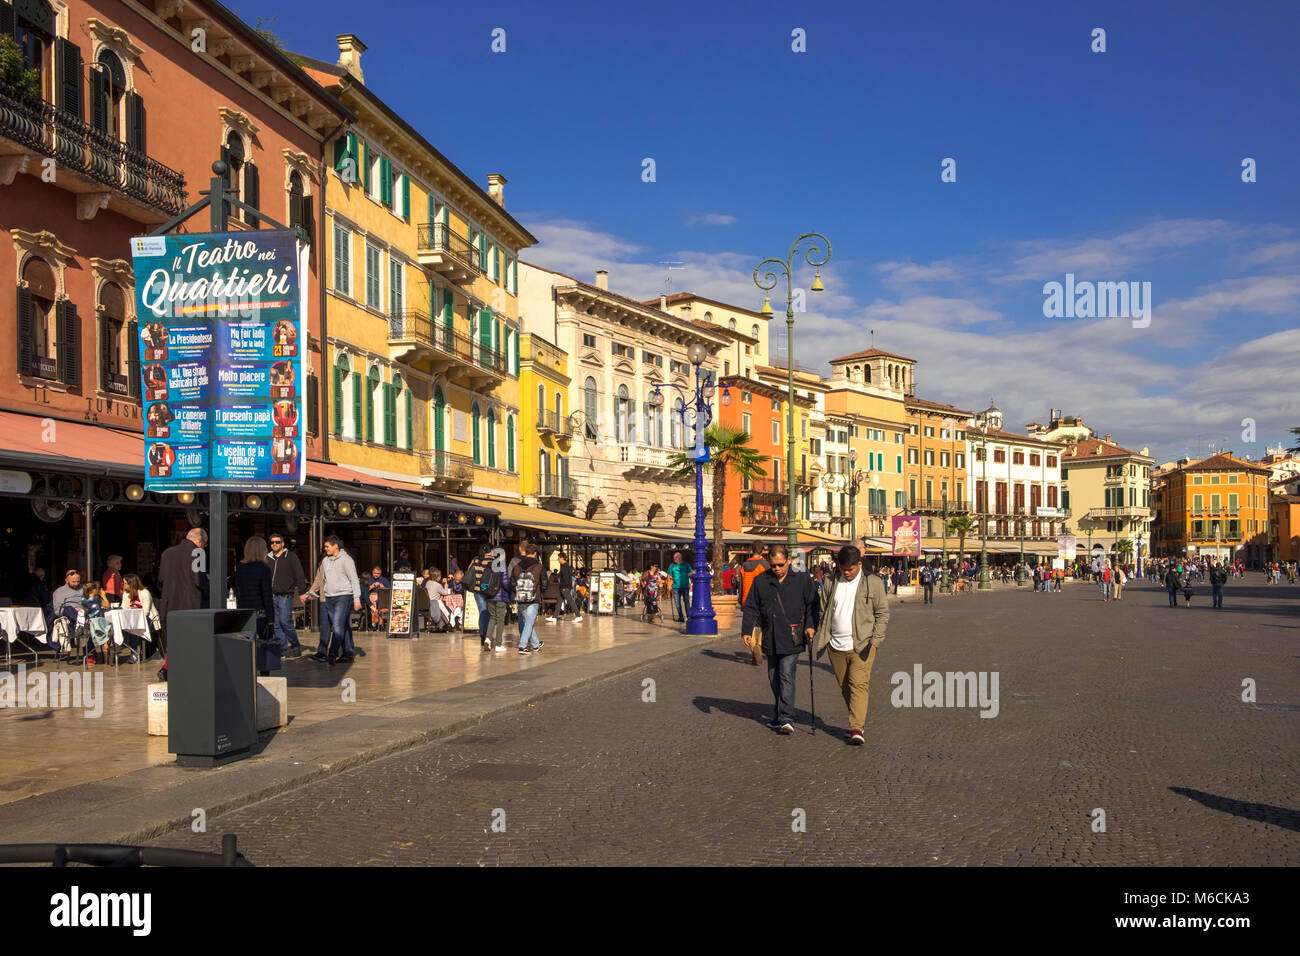 Piazza Bra, Verona, Italia Foto de stock